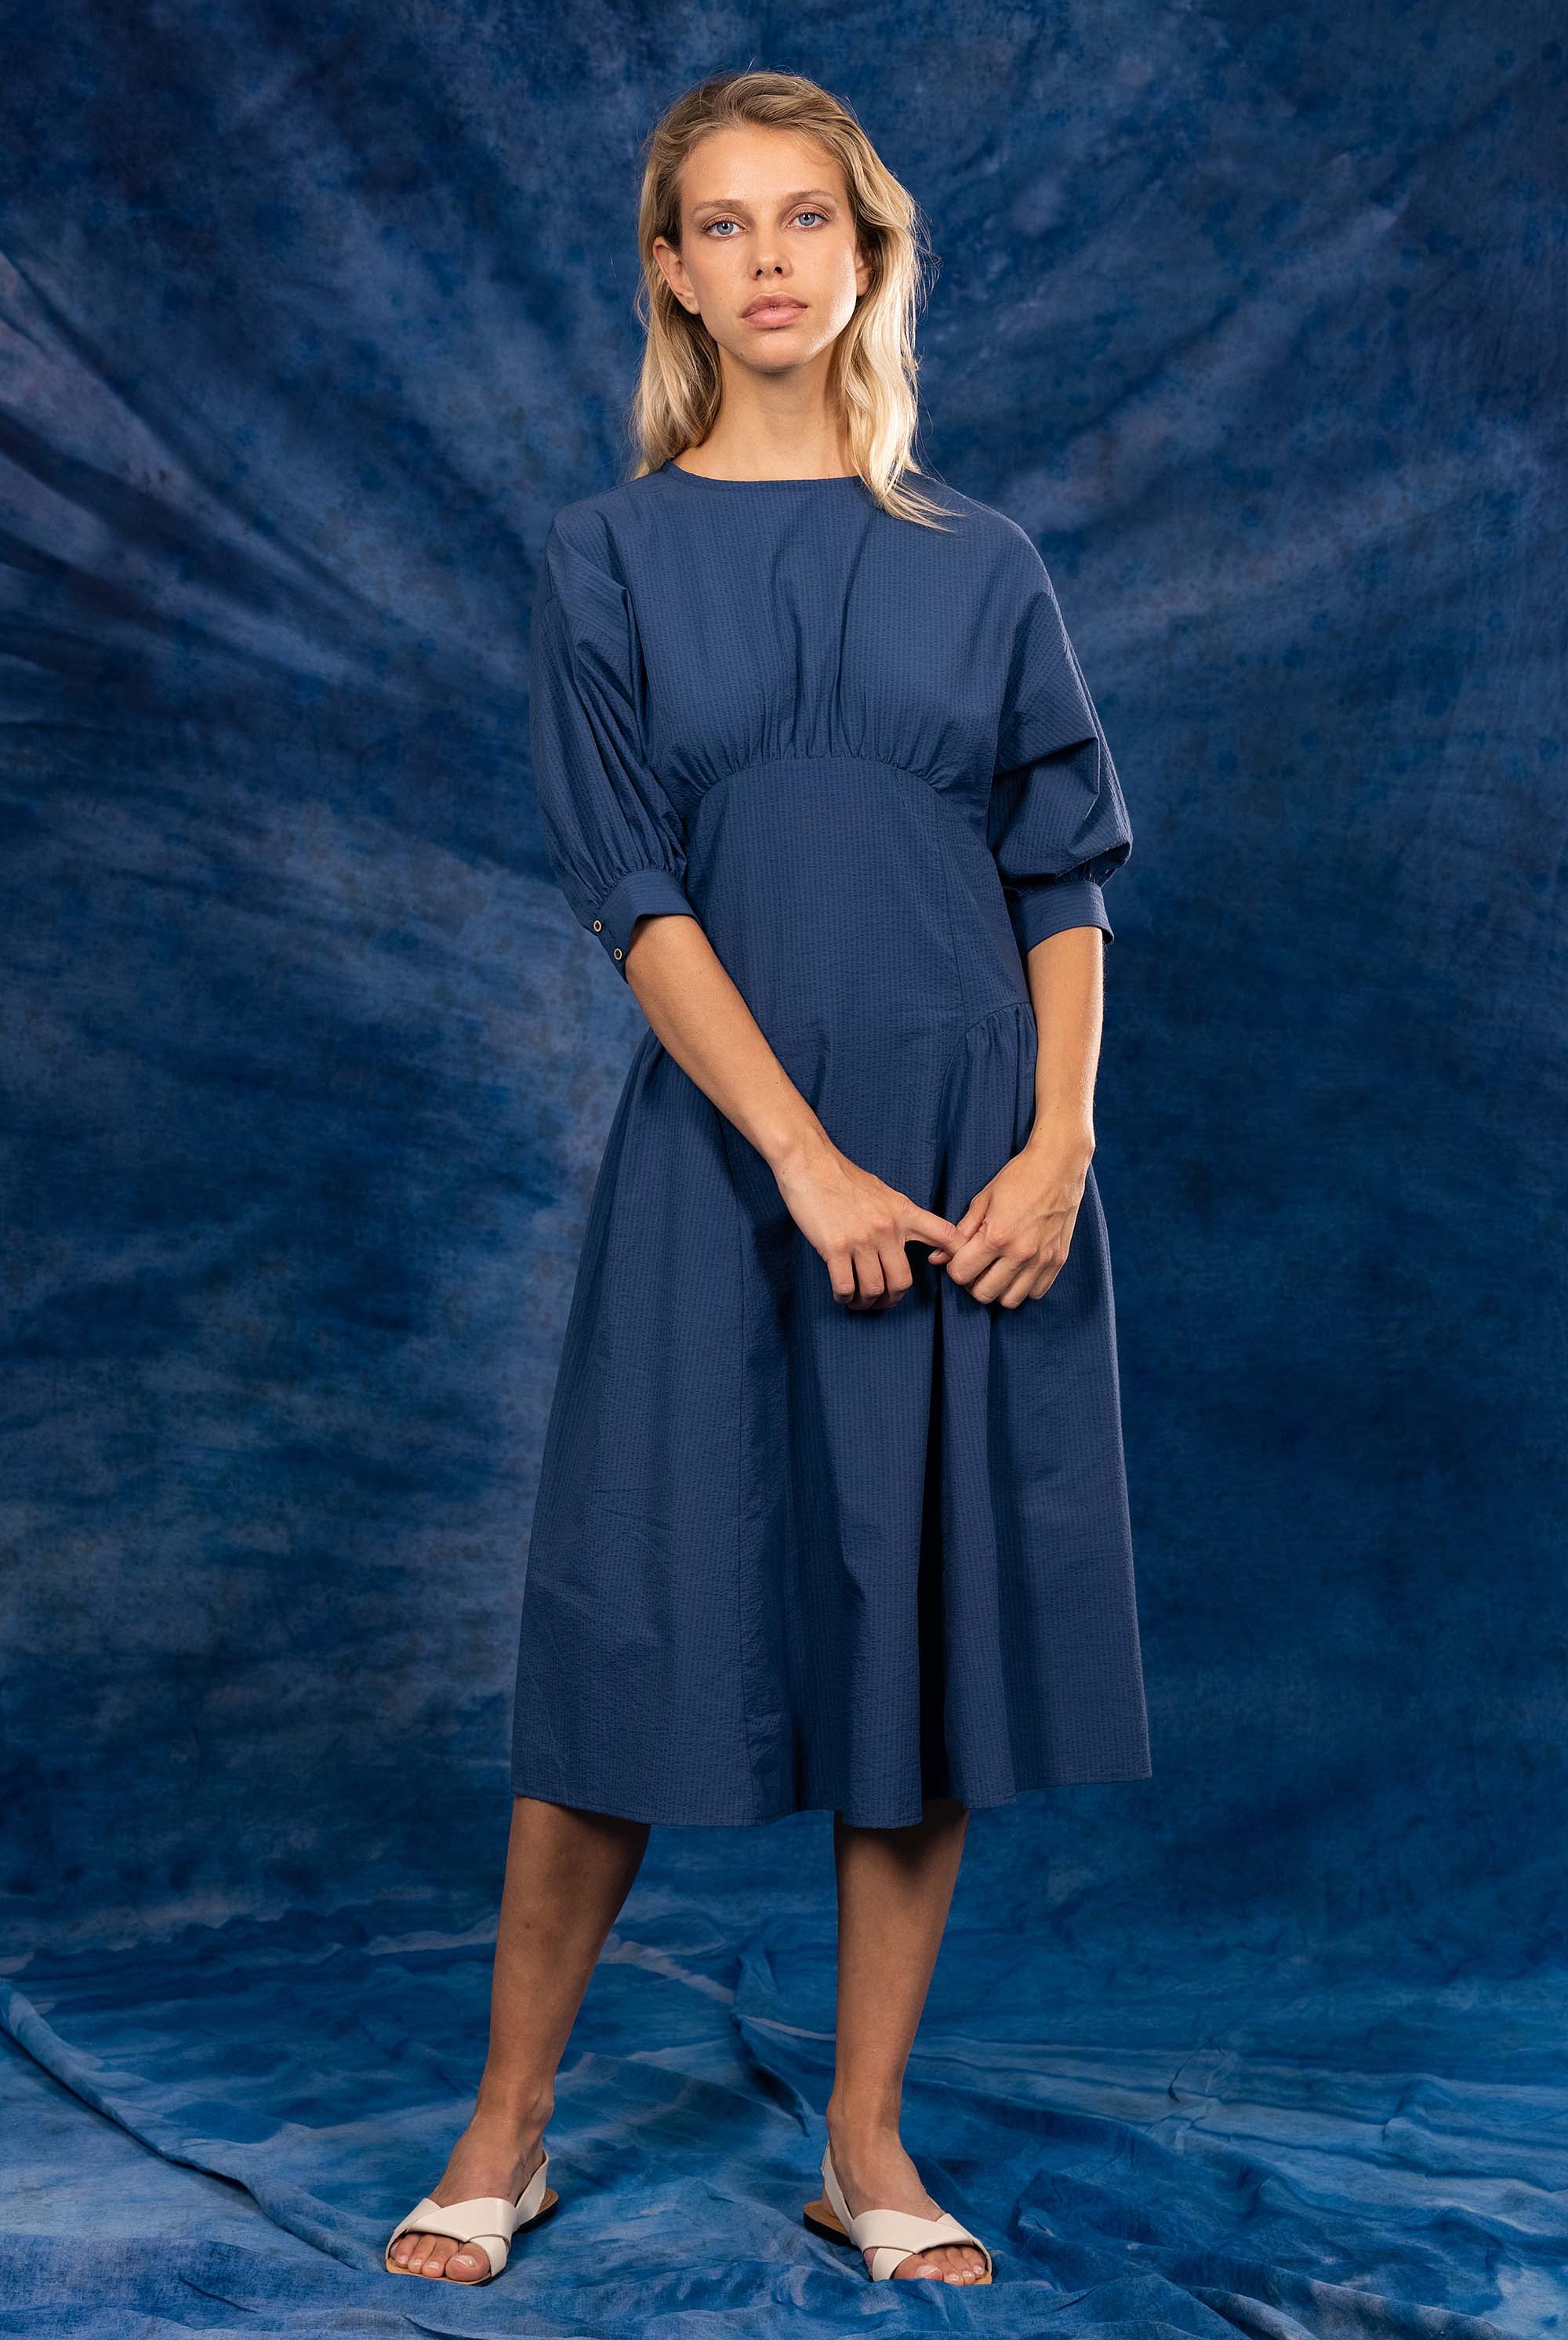 Robe Jirafa Bleu De Prusse robes femme style bohème, romantique ou urbain, pour tous les goûts